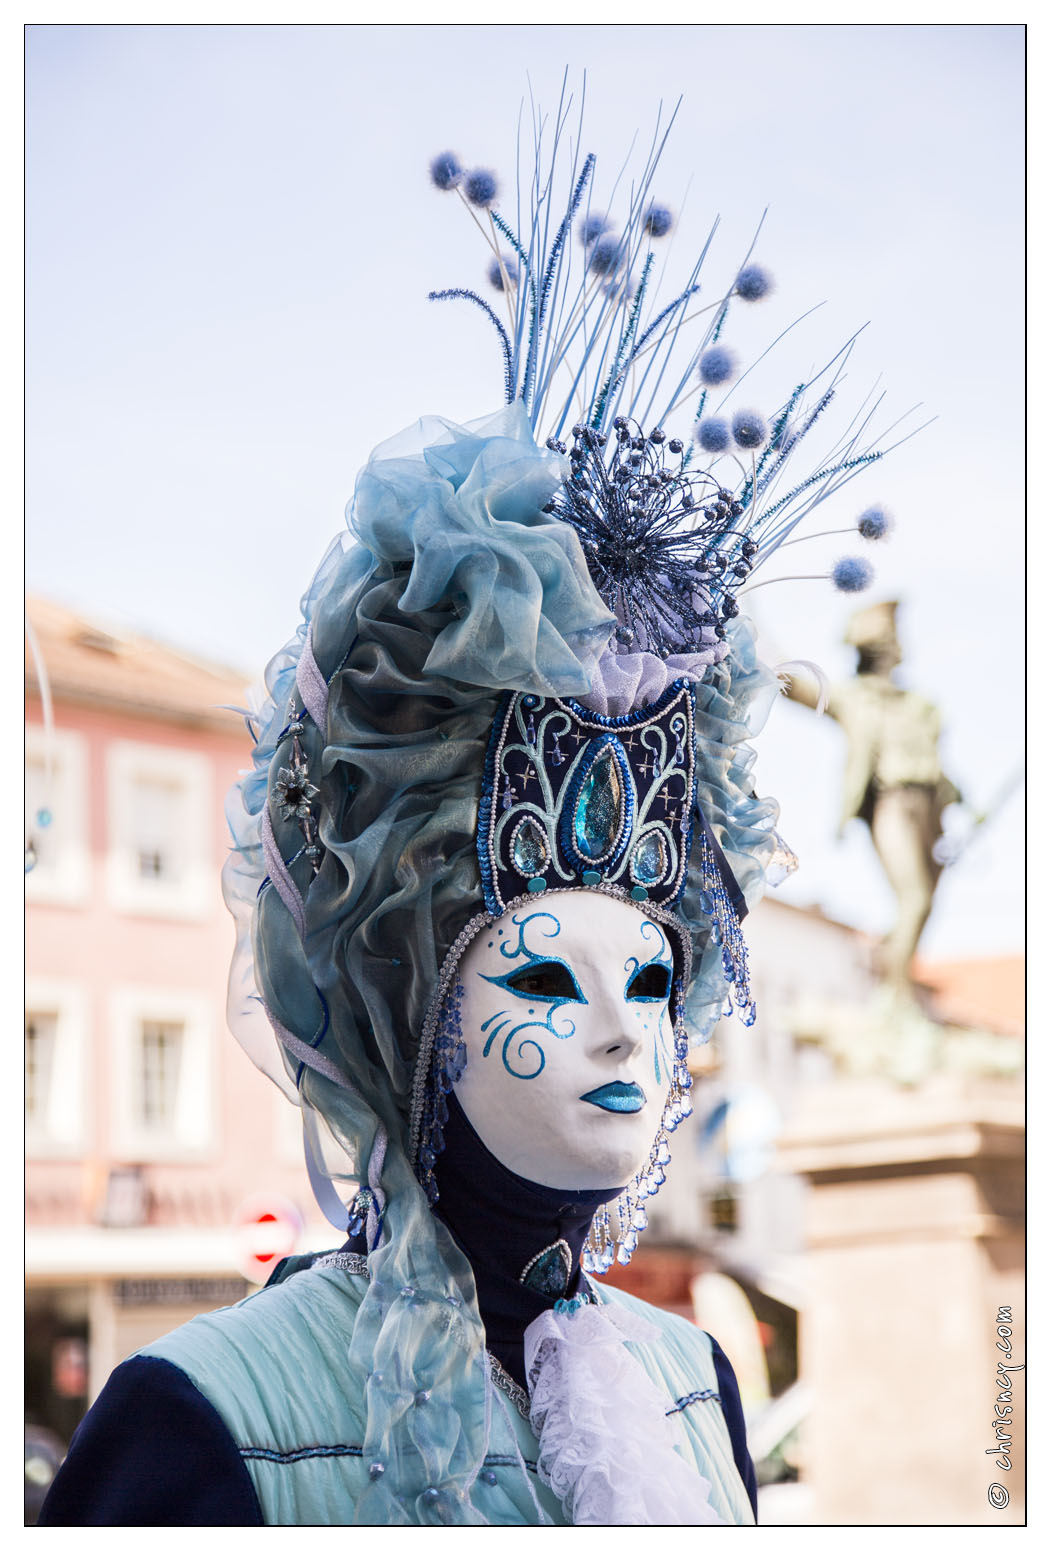 20140411-12_8799-Remiremont_Carnaval_Venitien.jpg